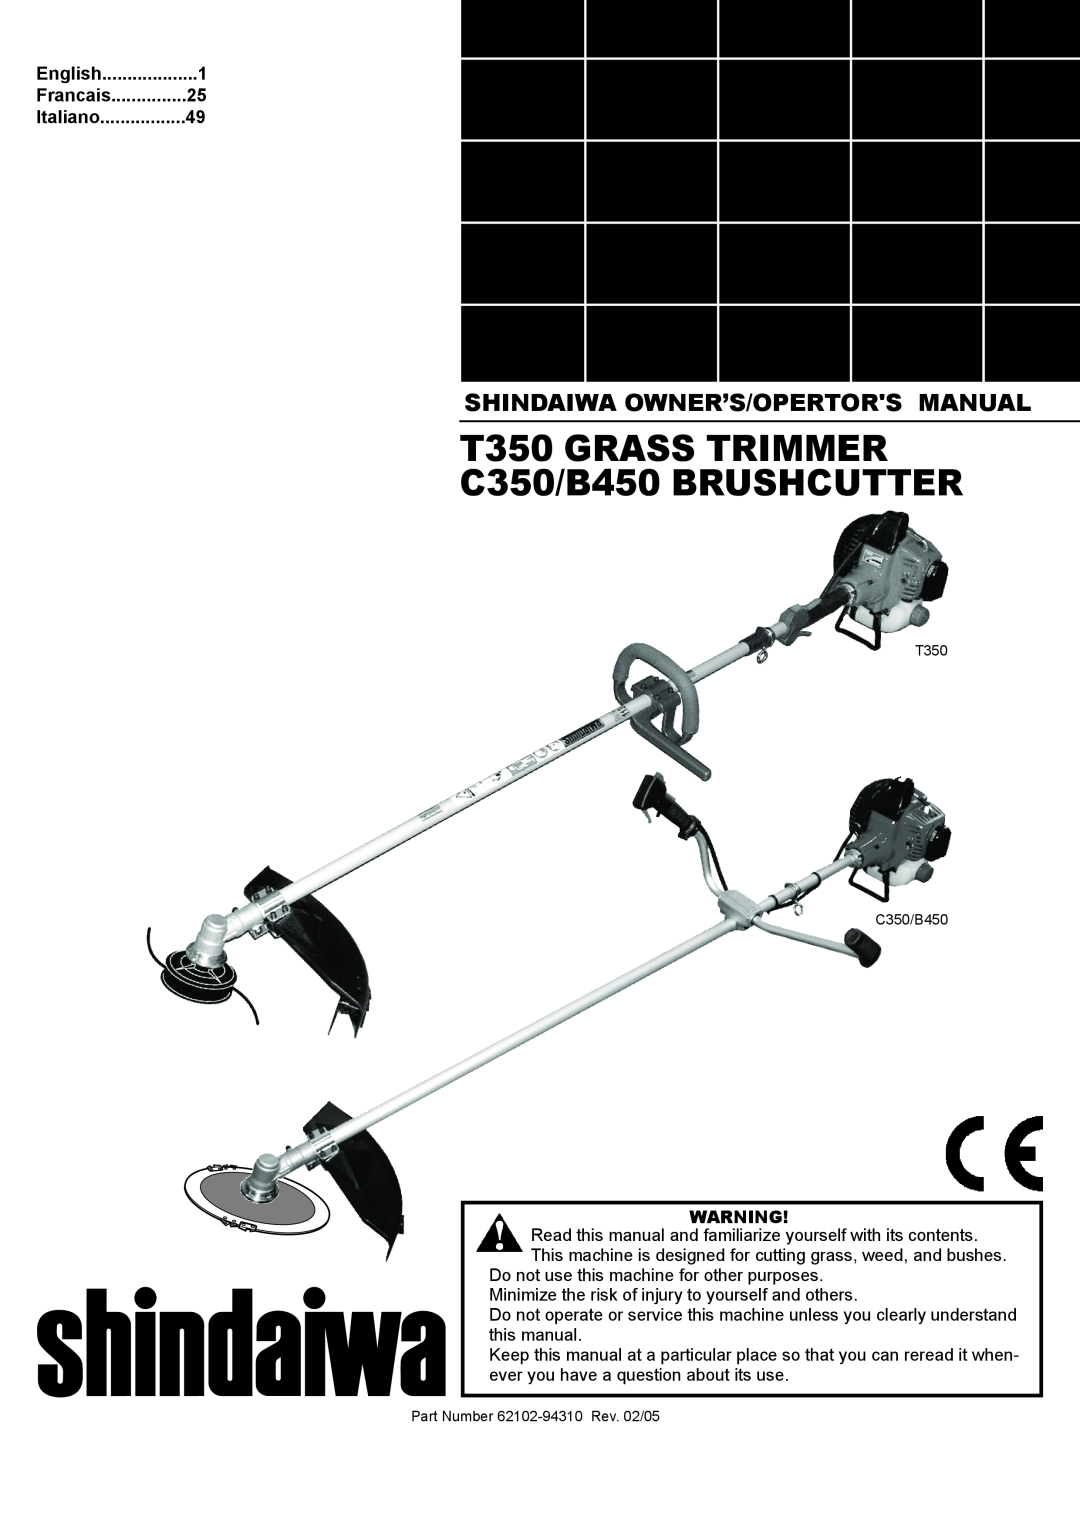 Symbol Technologies manual T350 GRASS TRIMMER C350/B450 BRUSHCUTTER, Shindaiwa Owner’S/Opertors Manual 